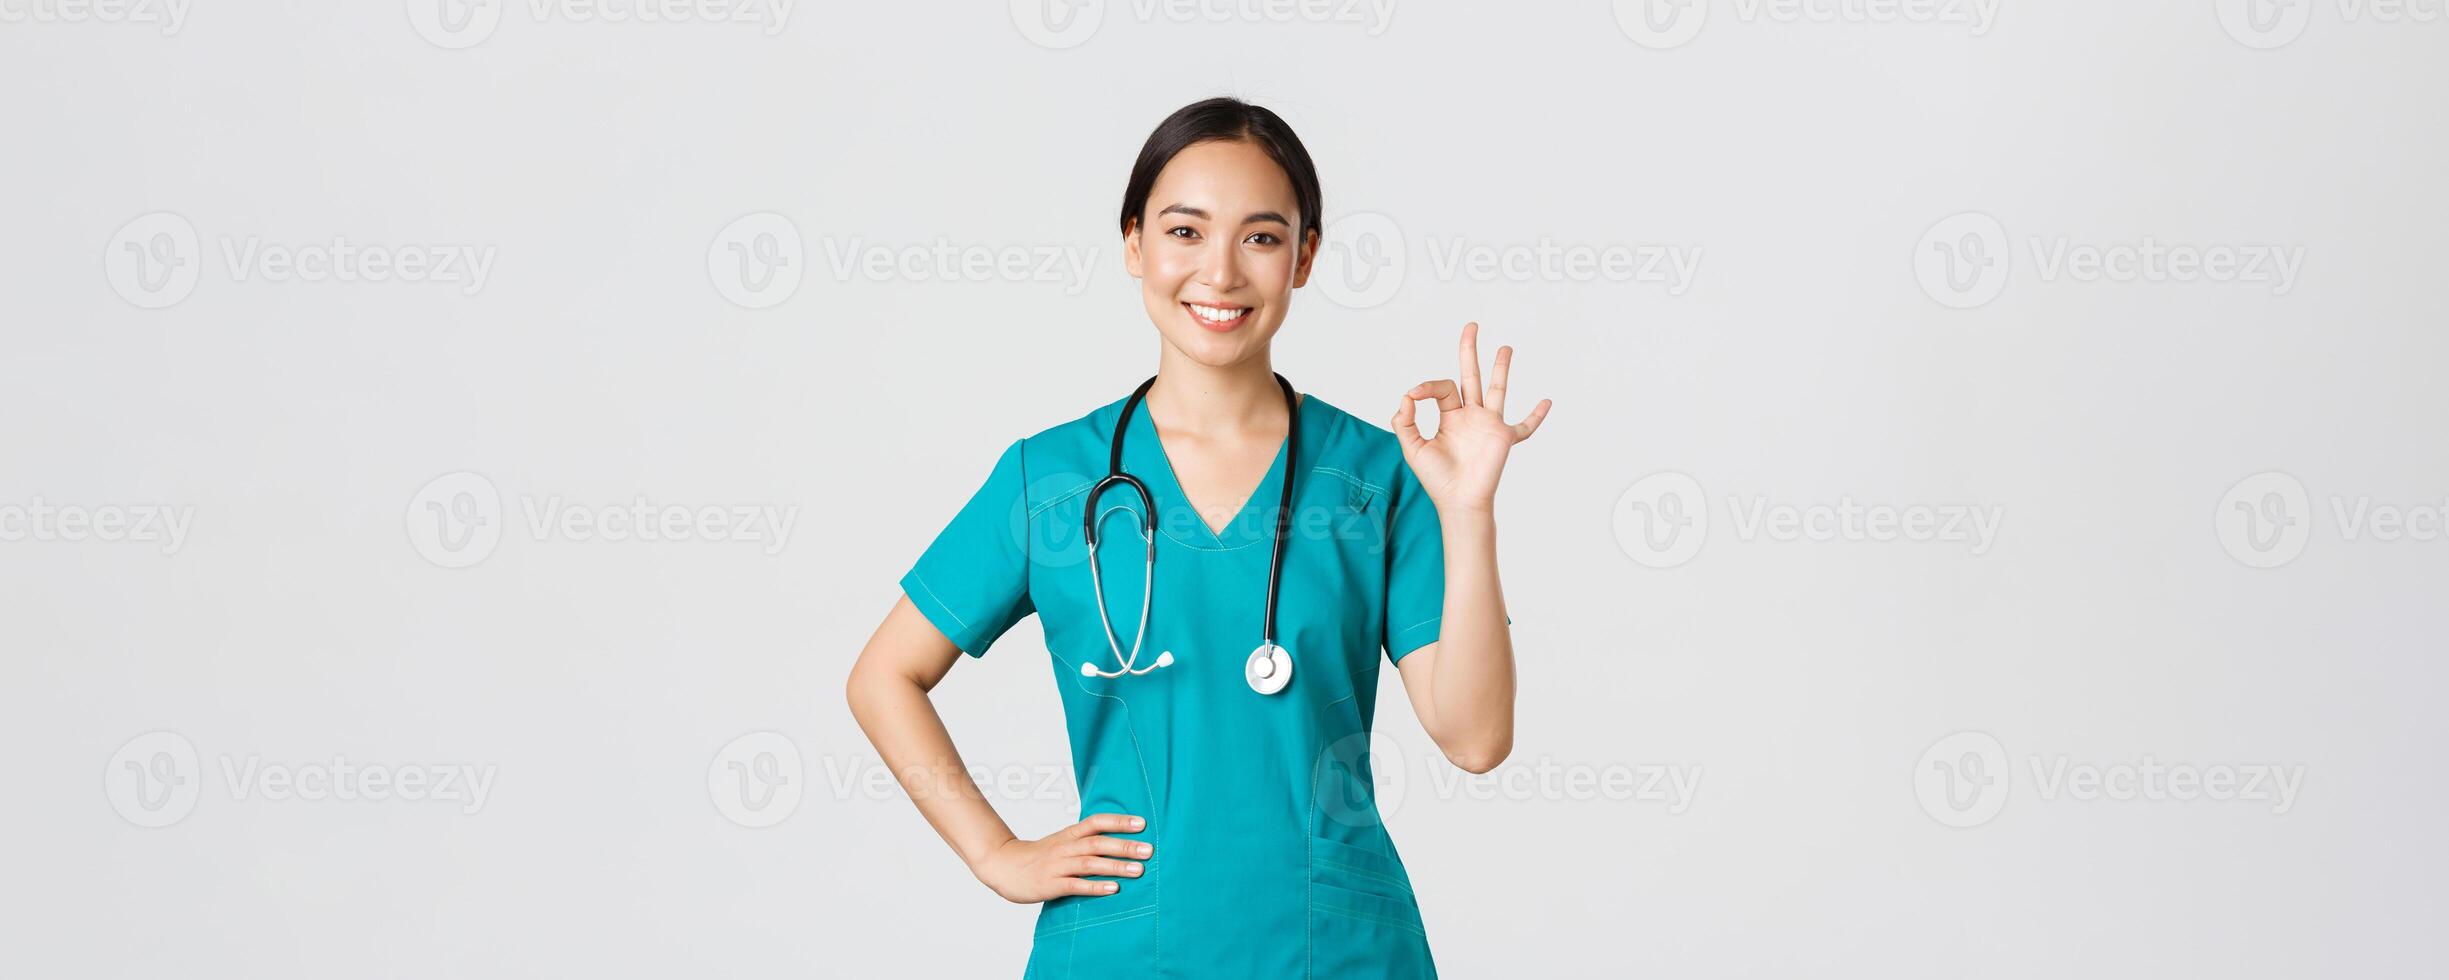 COVID-19, cuidados de saúde trabalhadores, pandemia conceito. profissional confiante sorridente ásia mulher doutor, fêmea enfermeira dentro esfrega assegurar tudo debaixo ao controle, mostrando OK gesto satisfeito foto